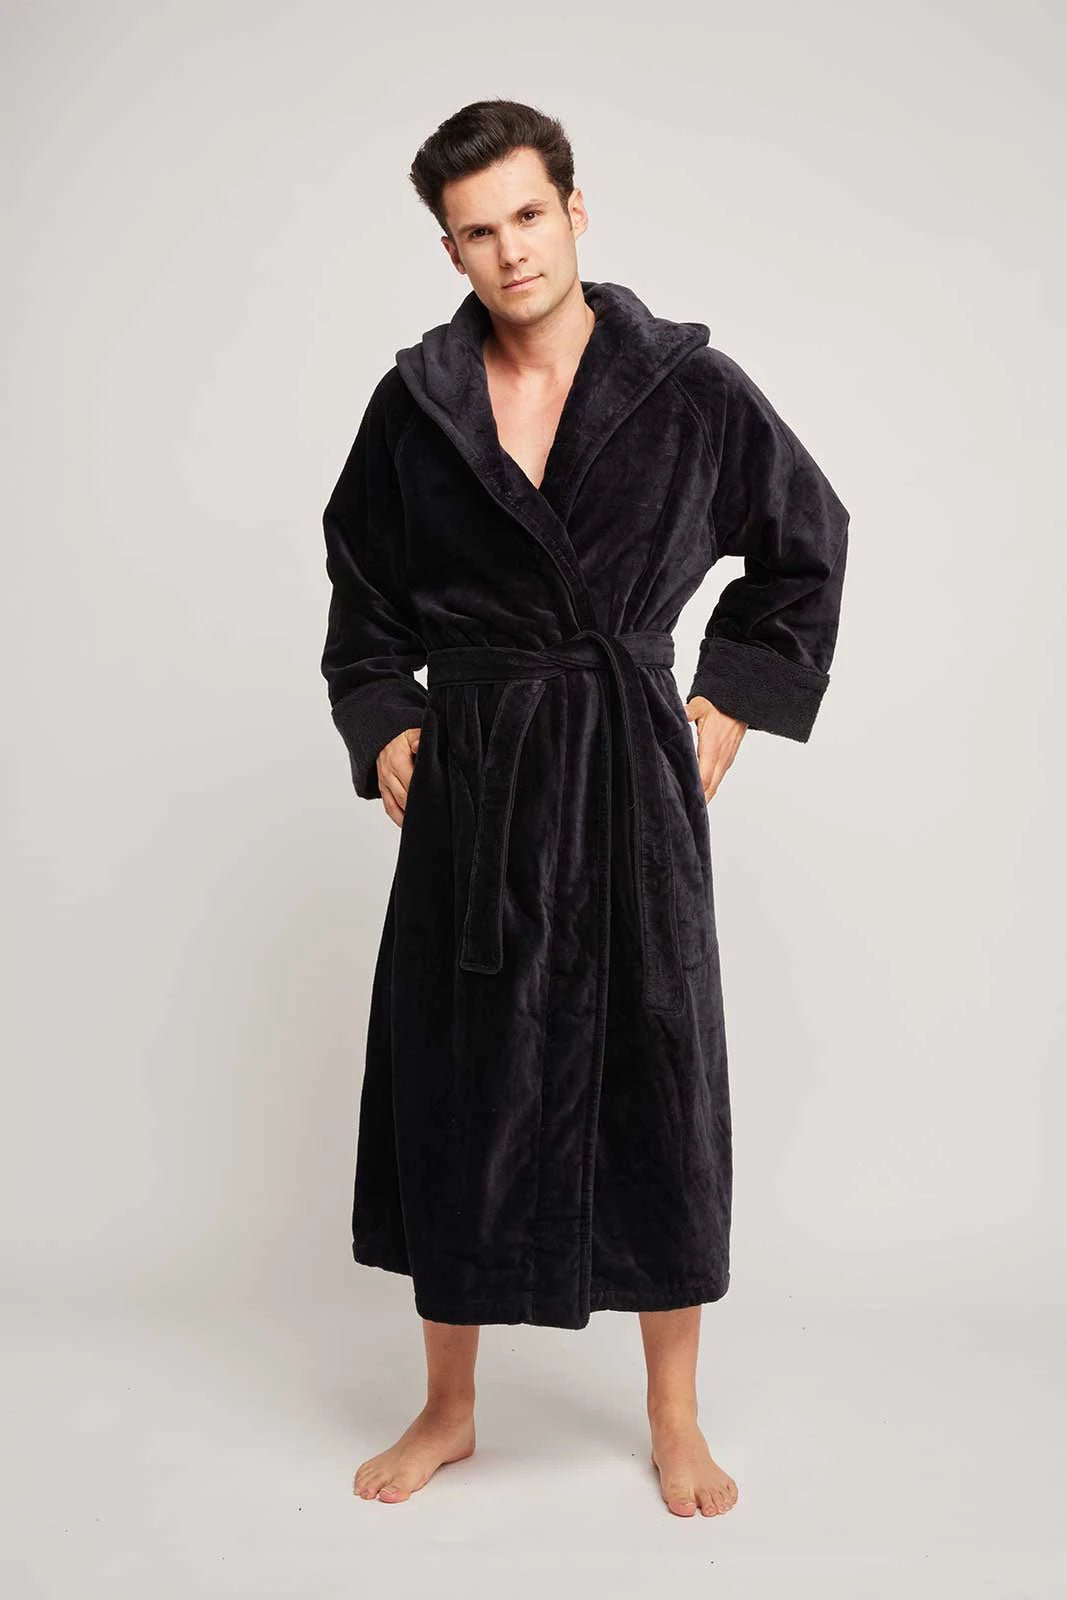 David Archy Hooded Robe Coral Fleece Soft Dressing Gown Mens Bathrobe Warm  Winter